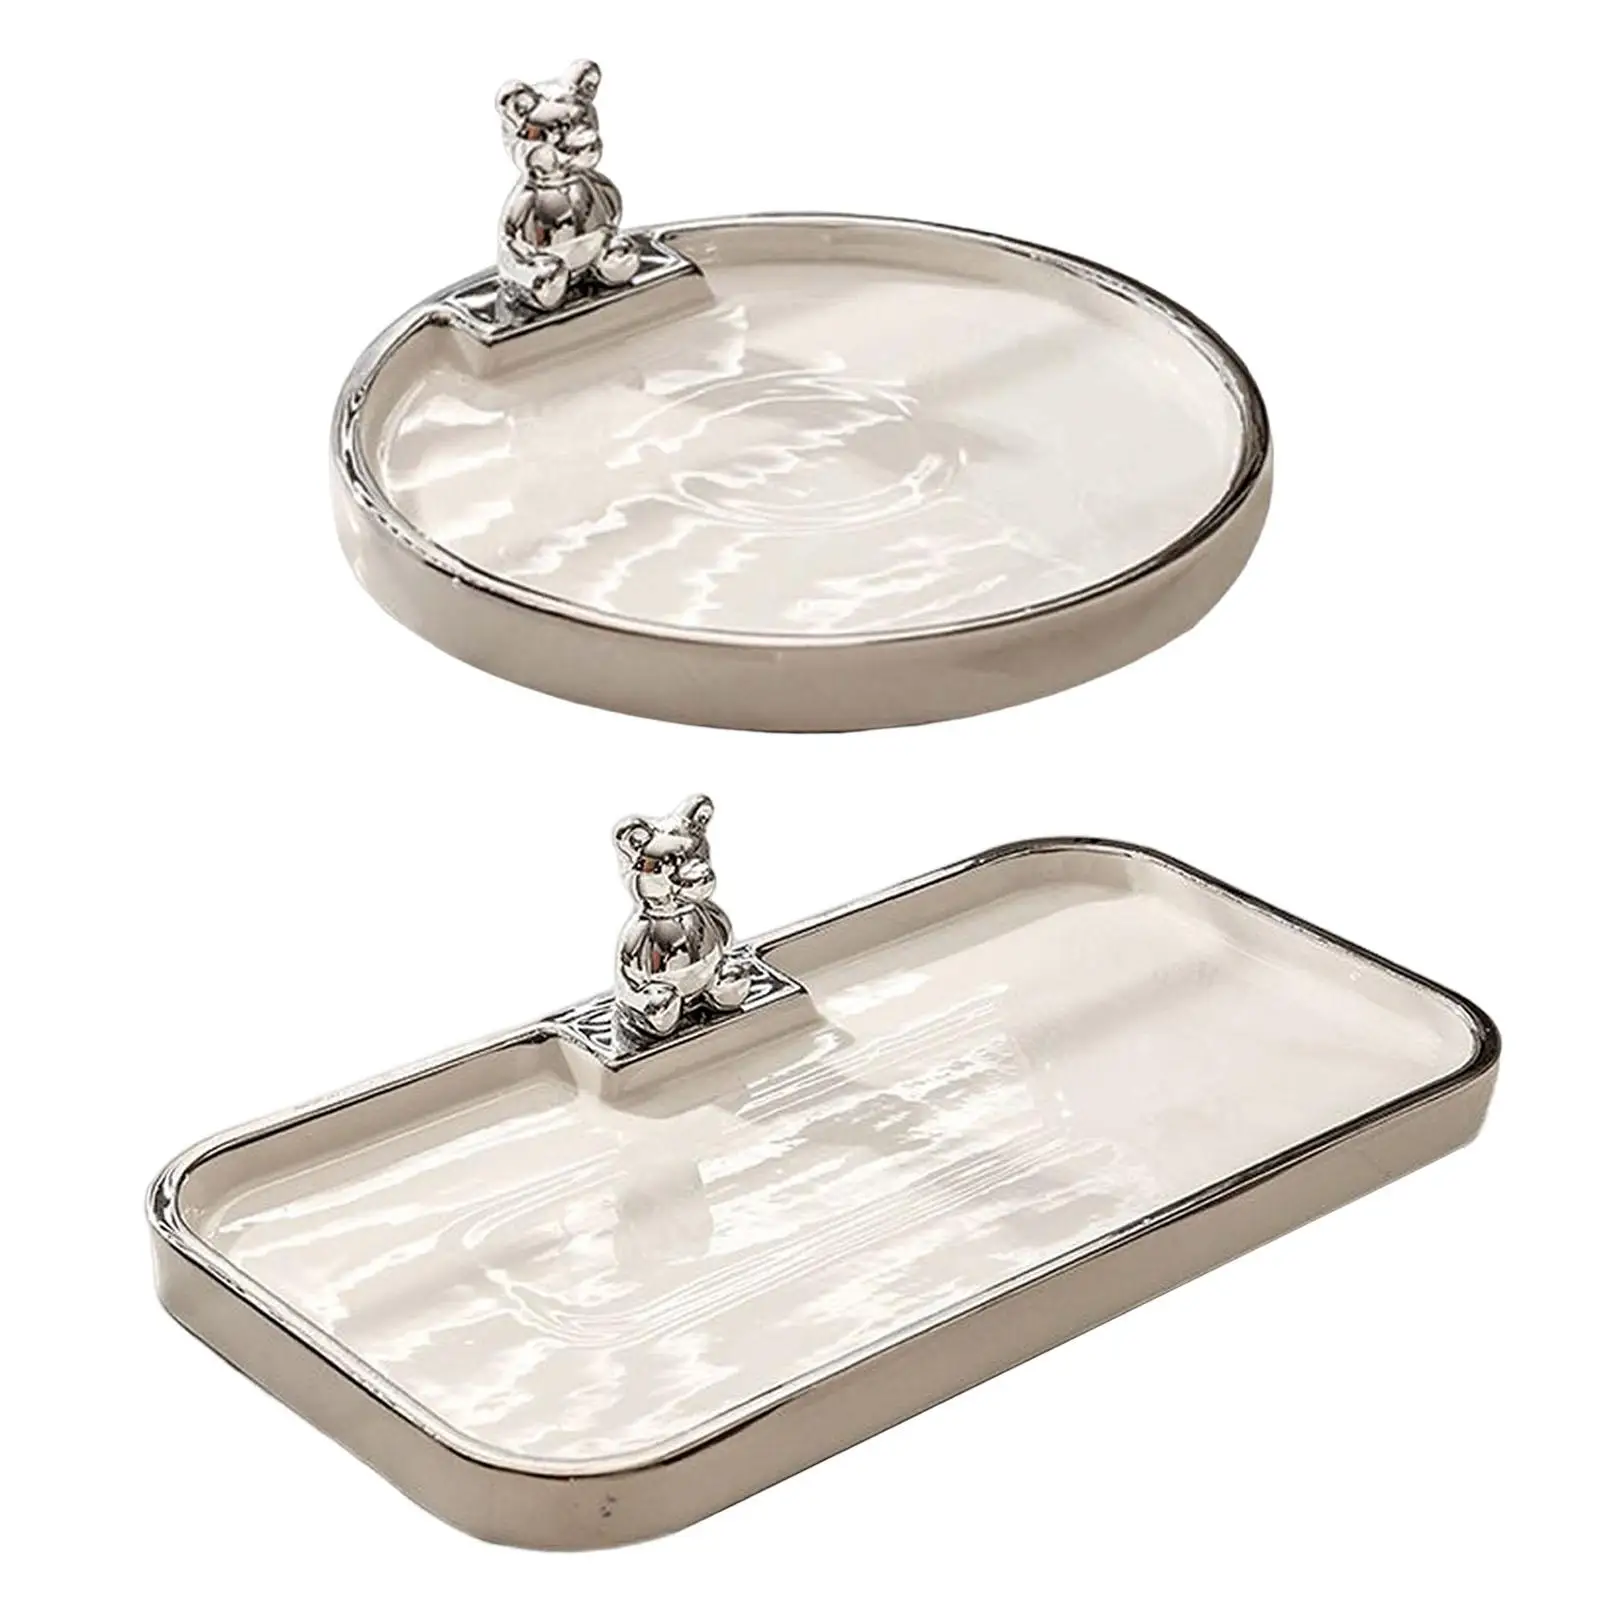 Serving Tray Decor Keys Perfume Candle Tray for Vanity Linen Closet Entrance